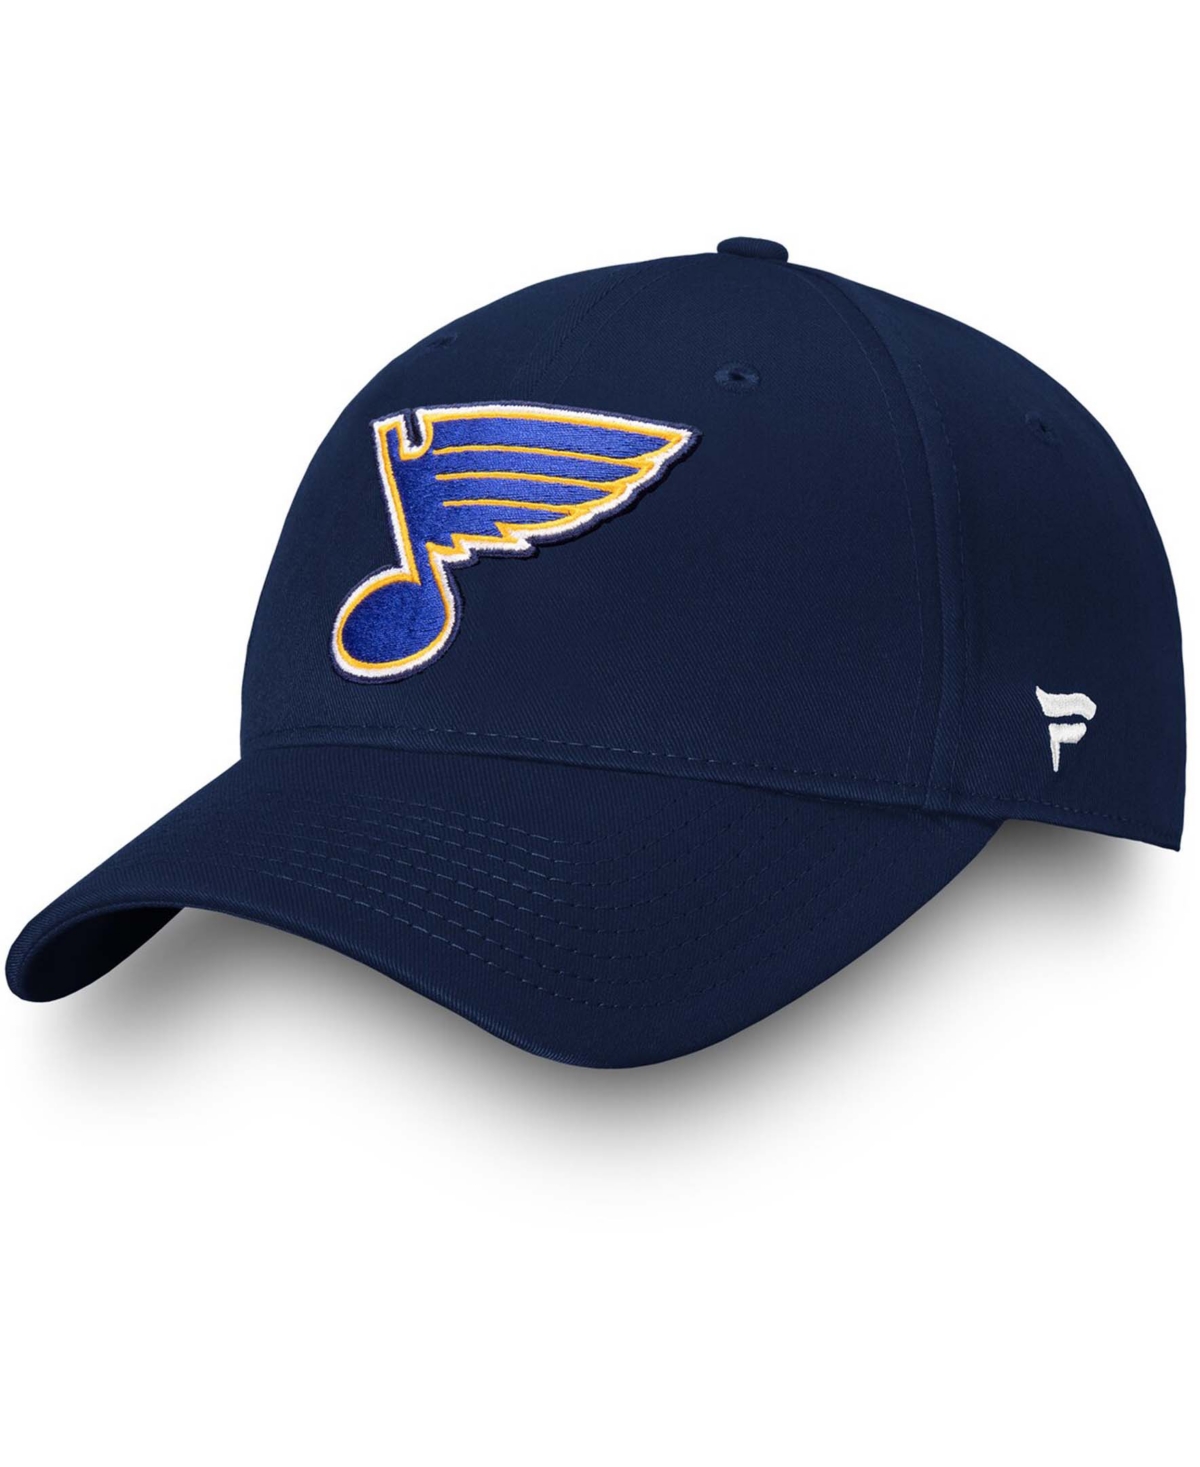 Fanatics Branded Men's Navy St. Louis Blues Core Adjustable Hat - Navy